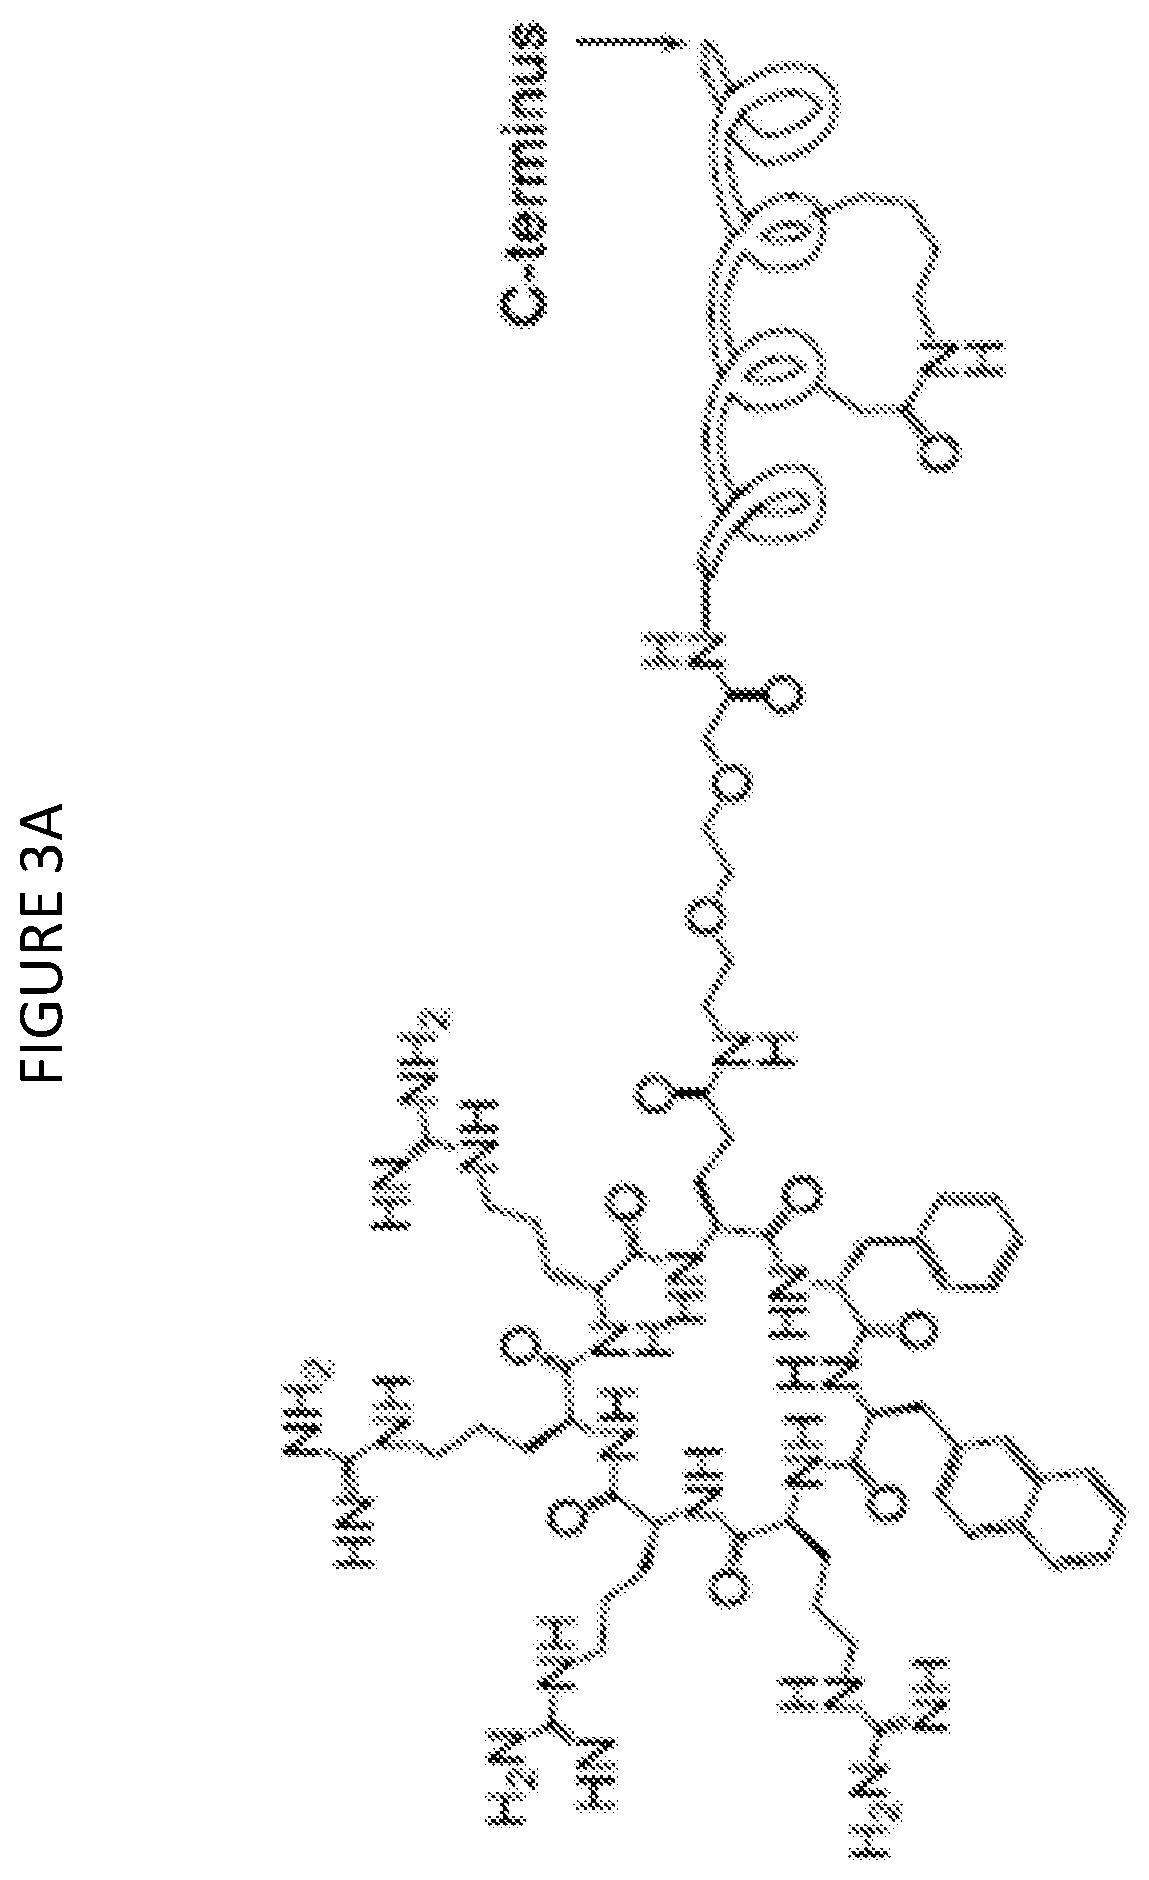 Stapled beta-catenin ligands